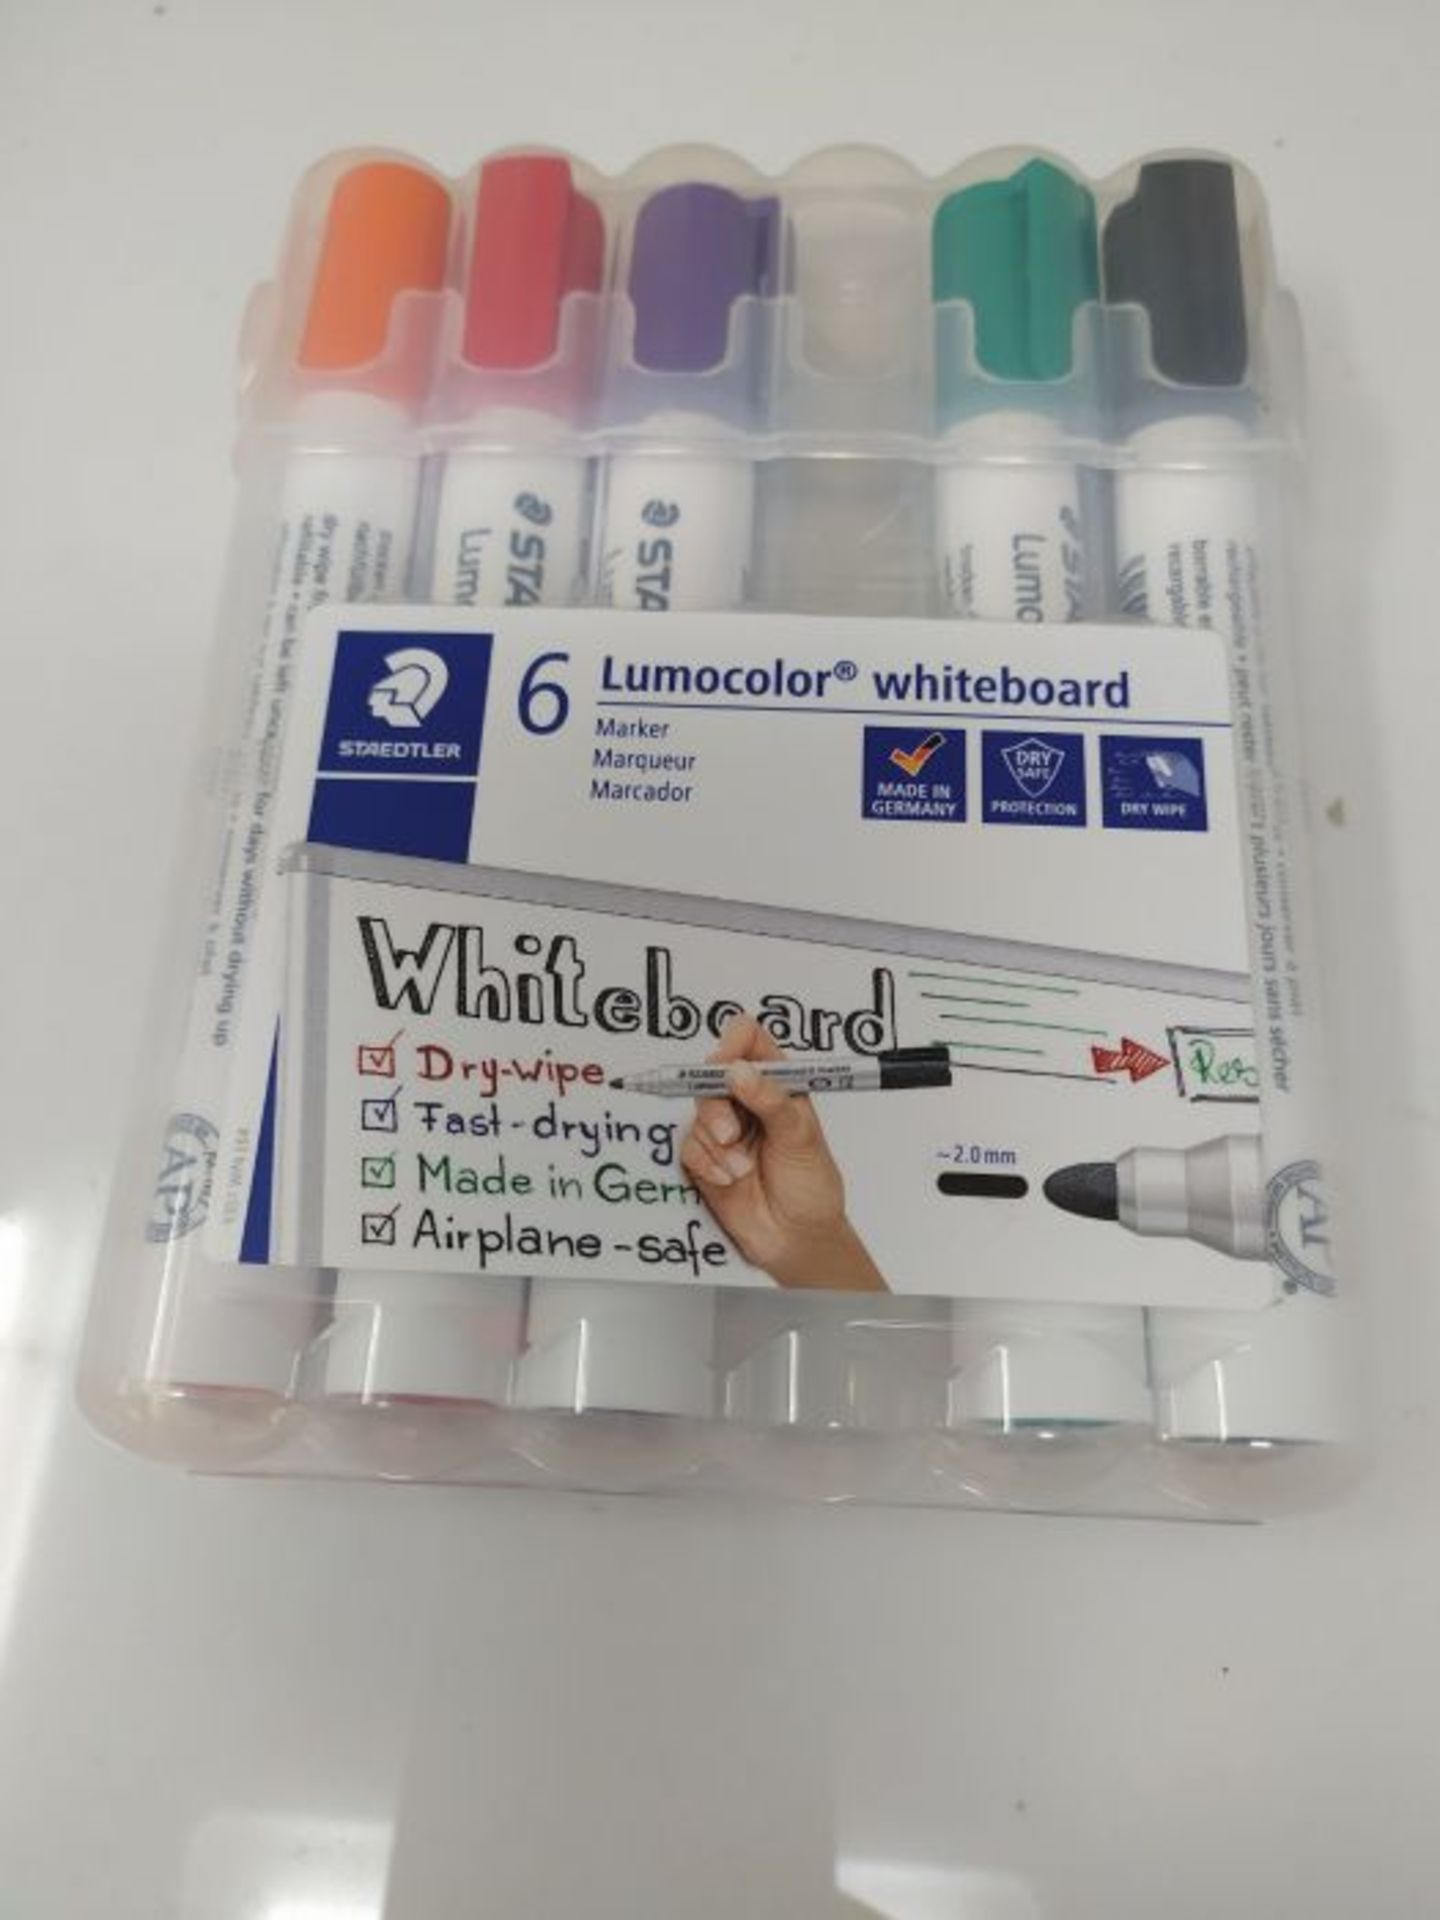 STAEDTLER 351WP6 Lumocolour Whiteboard Marker with Bullet Tip, Multicolor, Pack of 6 - Image 2 of 2